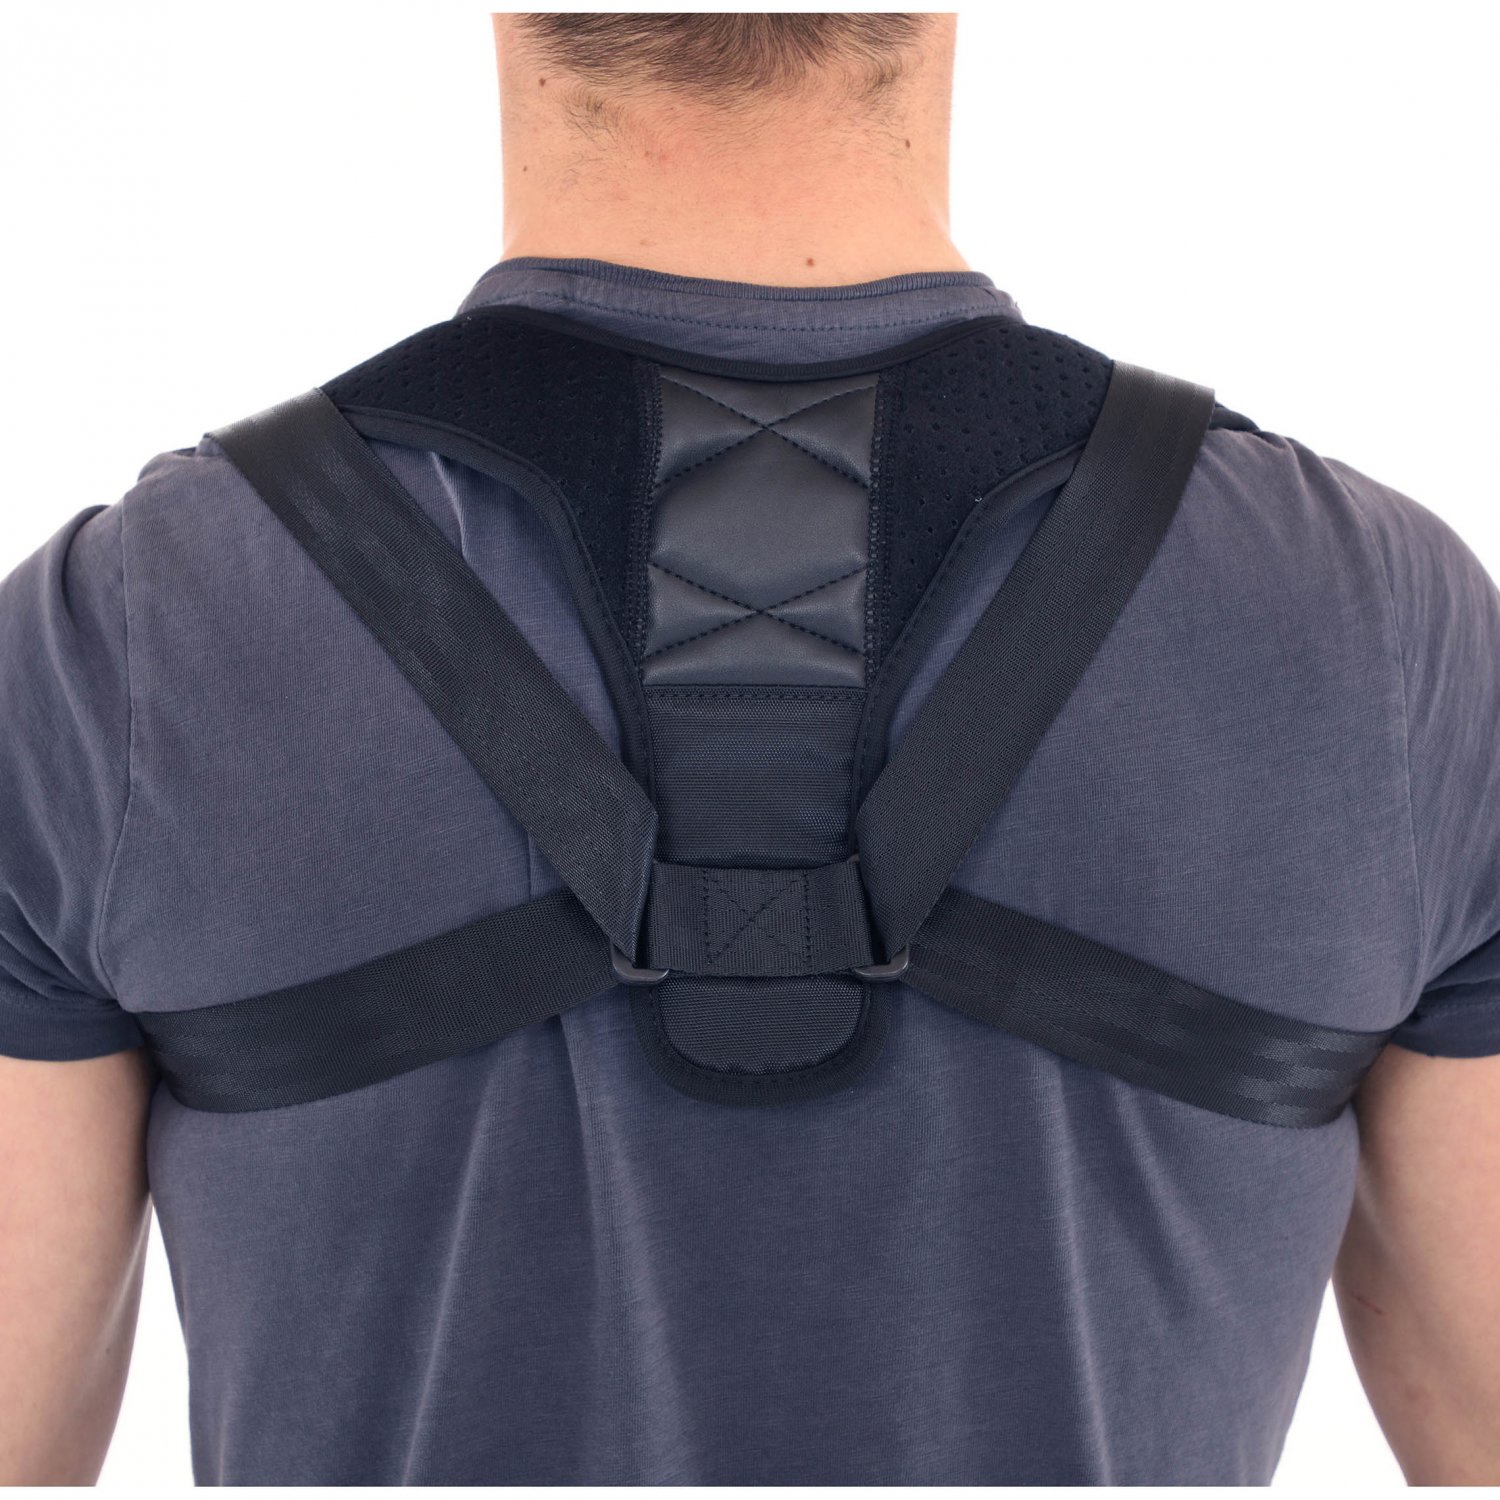 Medium Sports Back Shoulder Neck Pain Relief Posture Brace Corre